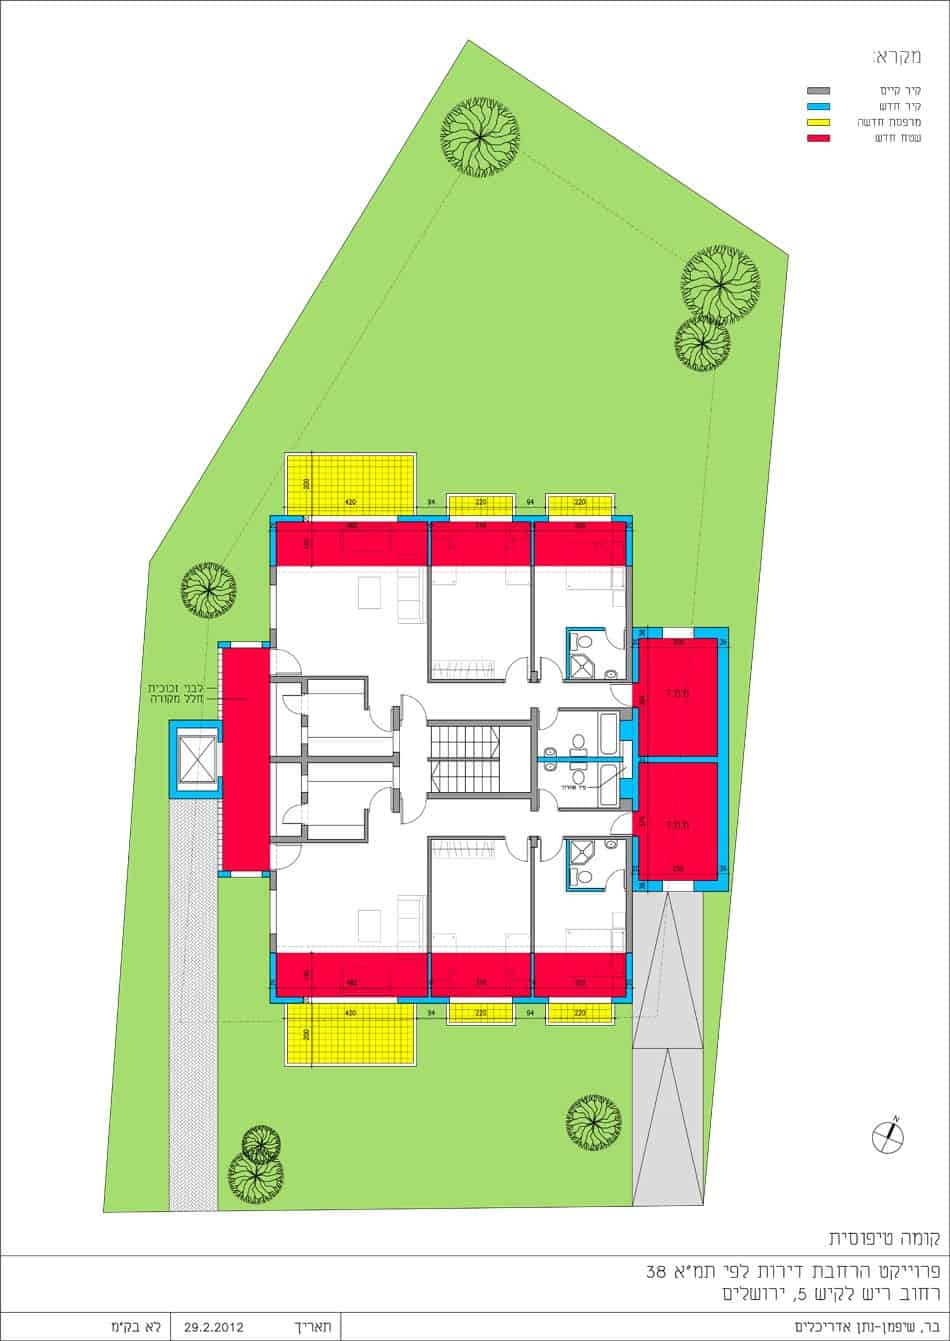 Reish Lakish 5, Jerusalem – Typical floor plan in Tama 38 project